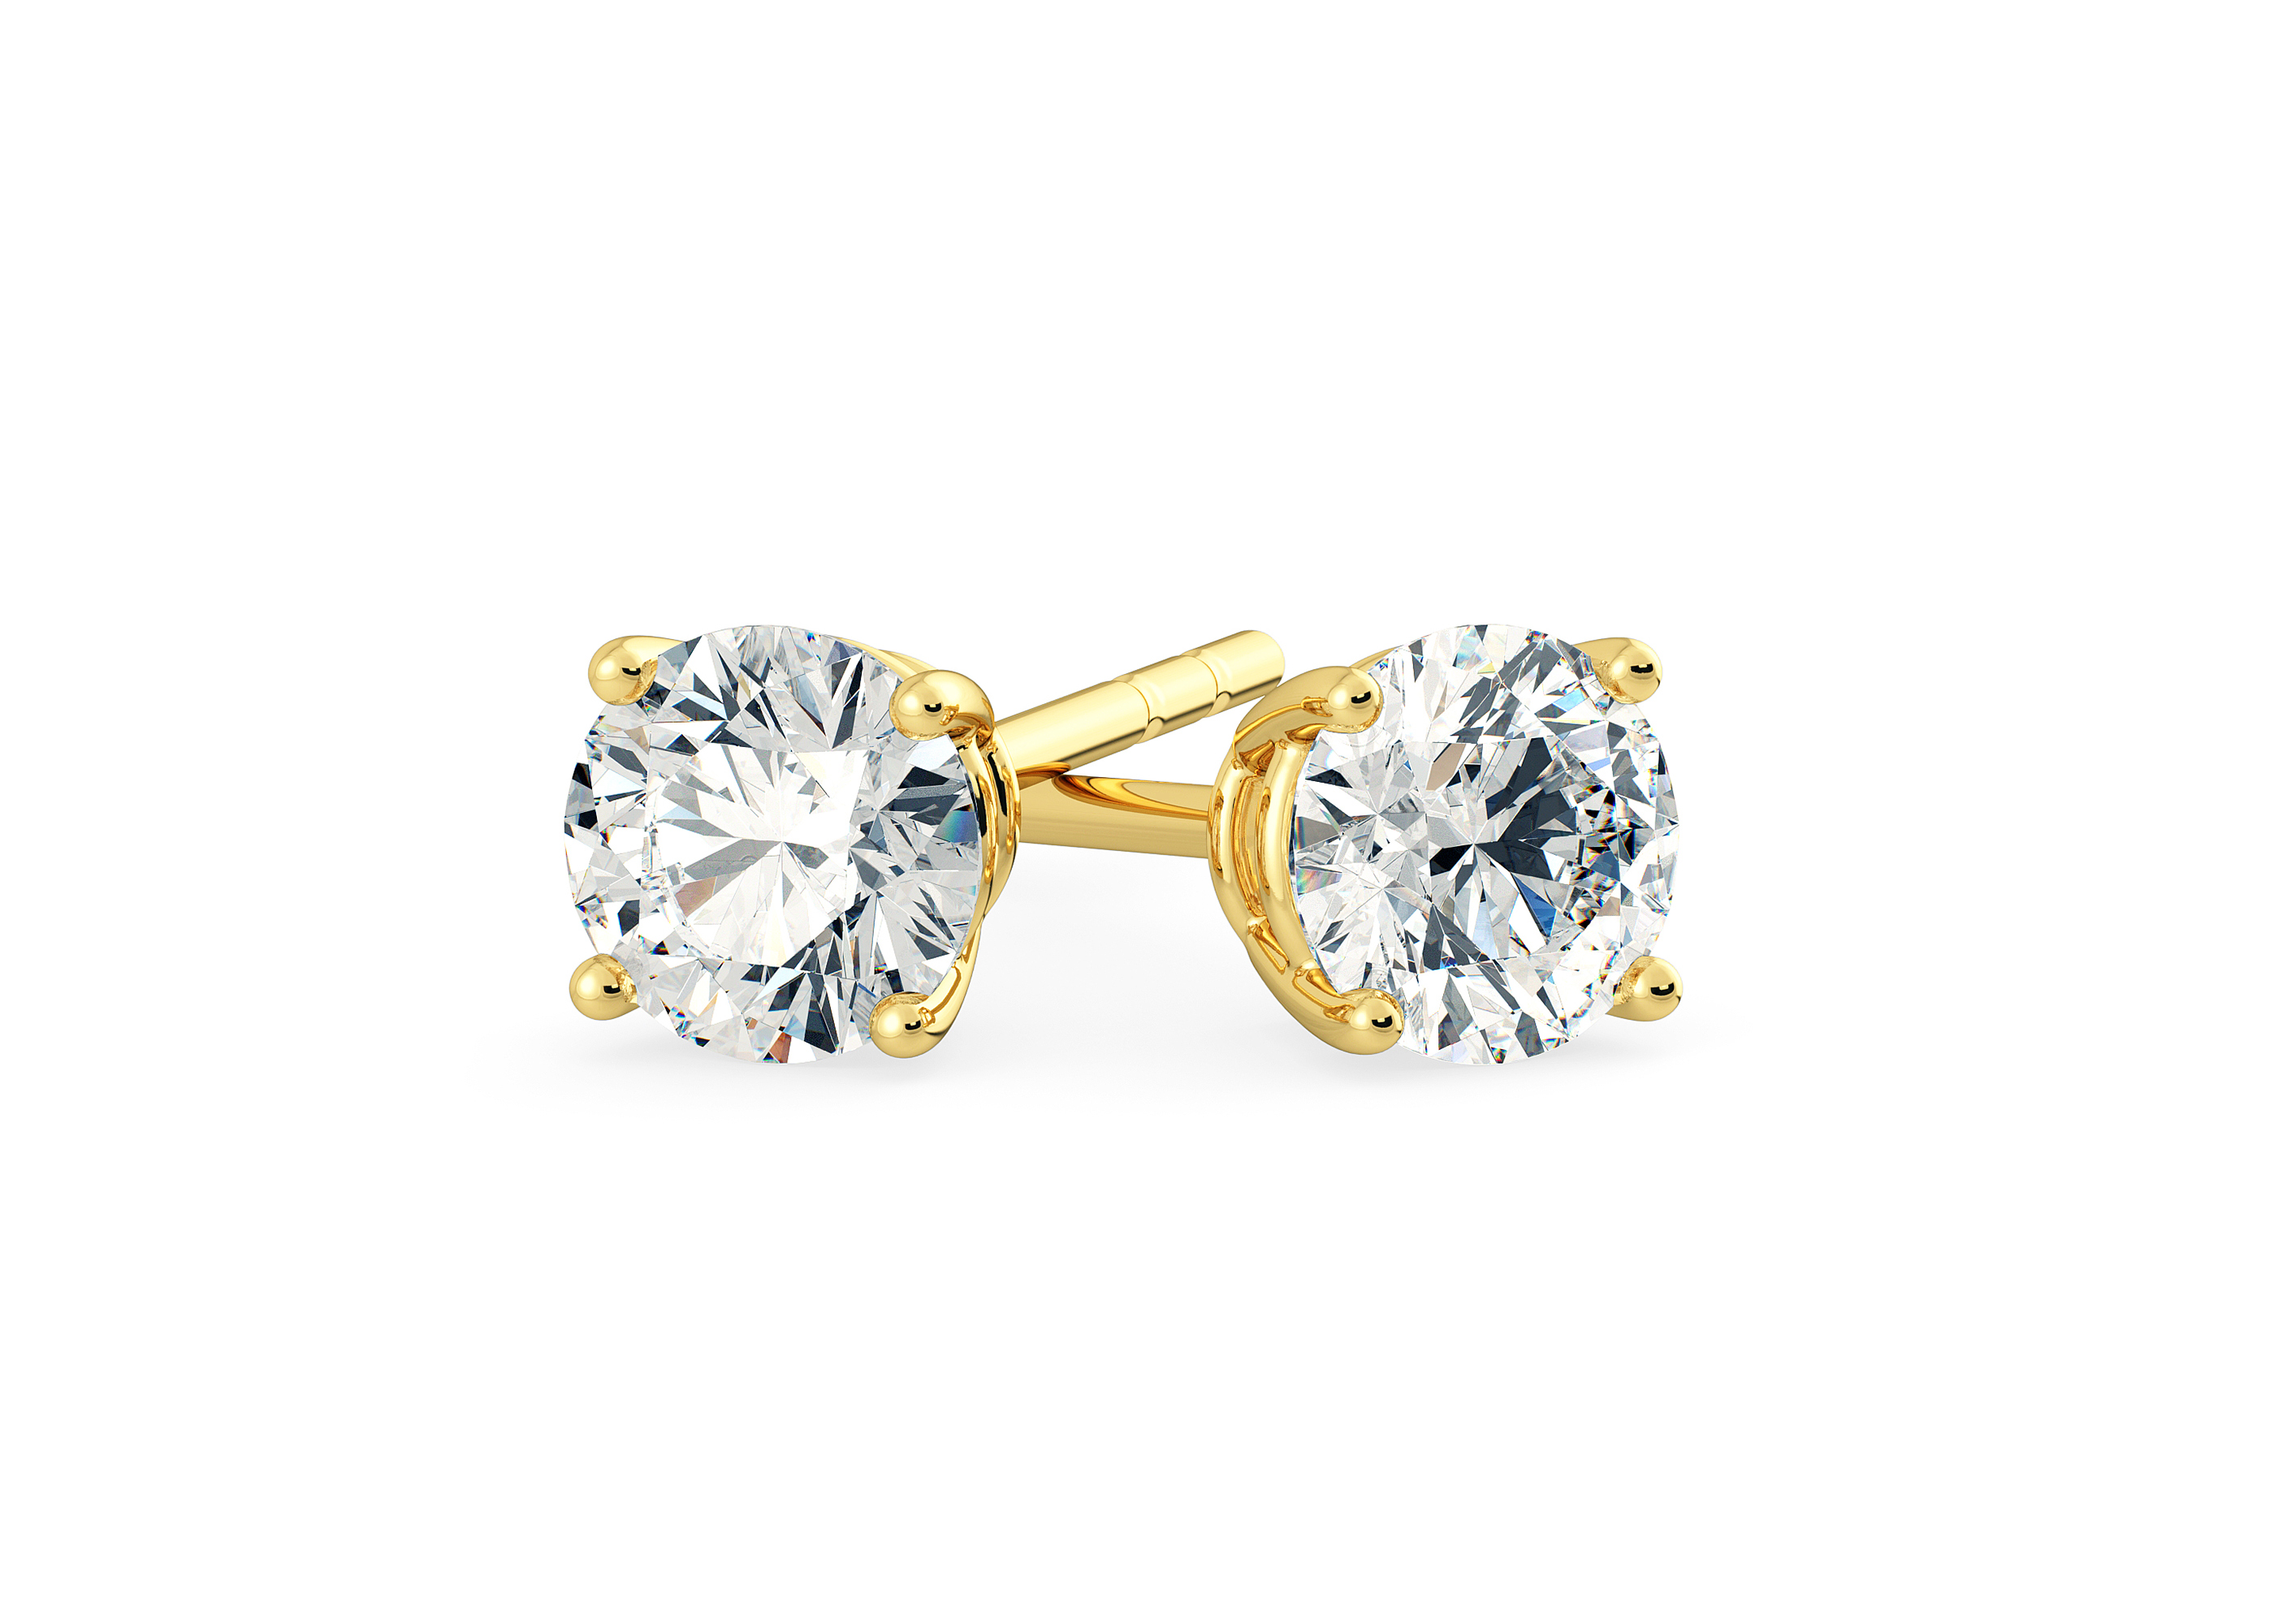 Half Carat Round Brilliant Diamond Stud Earrings in 18K Yellow Gold